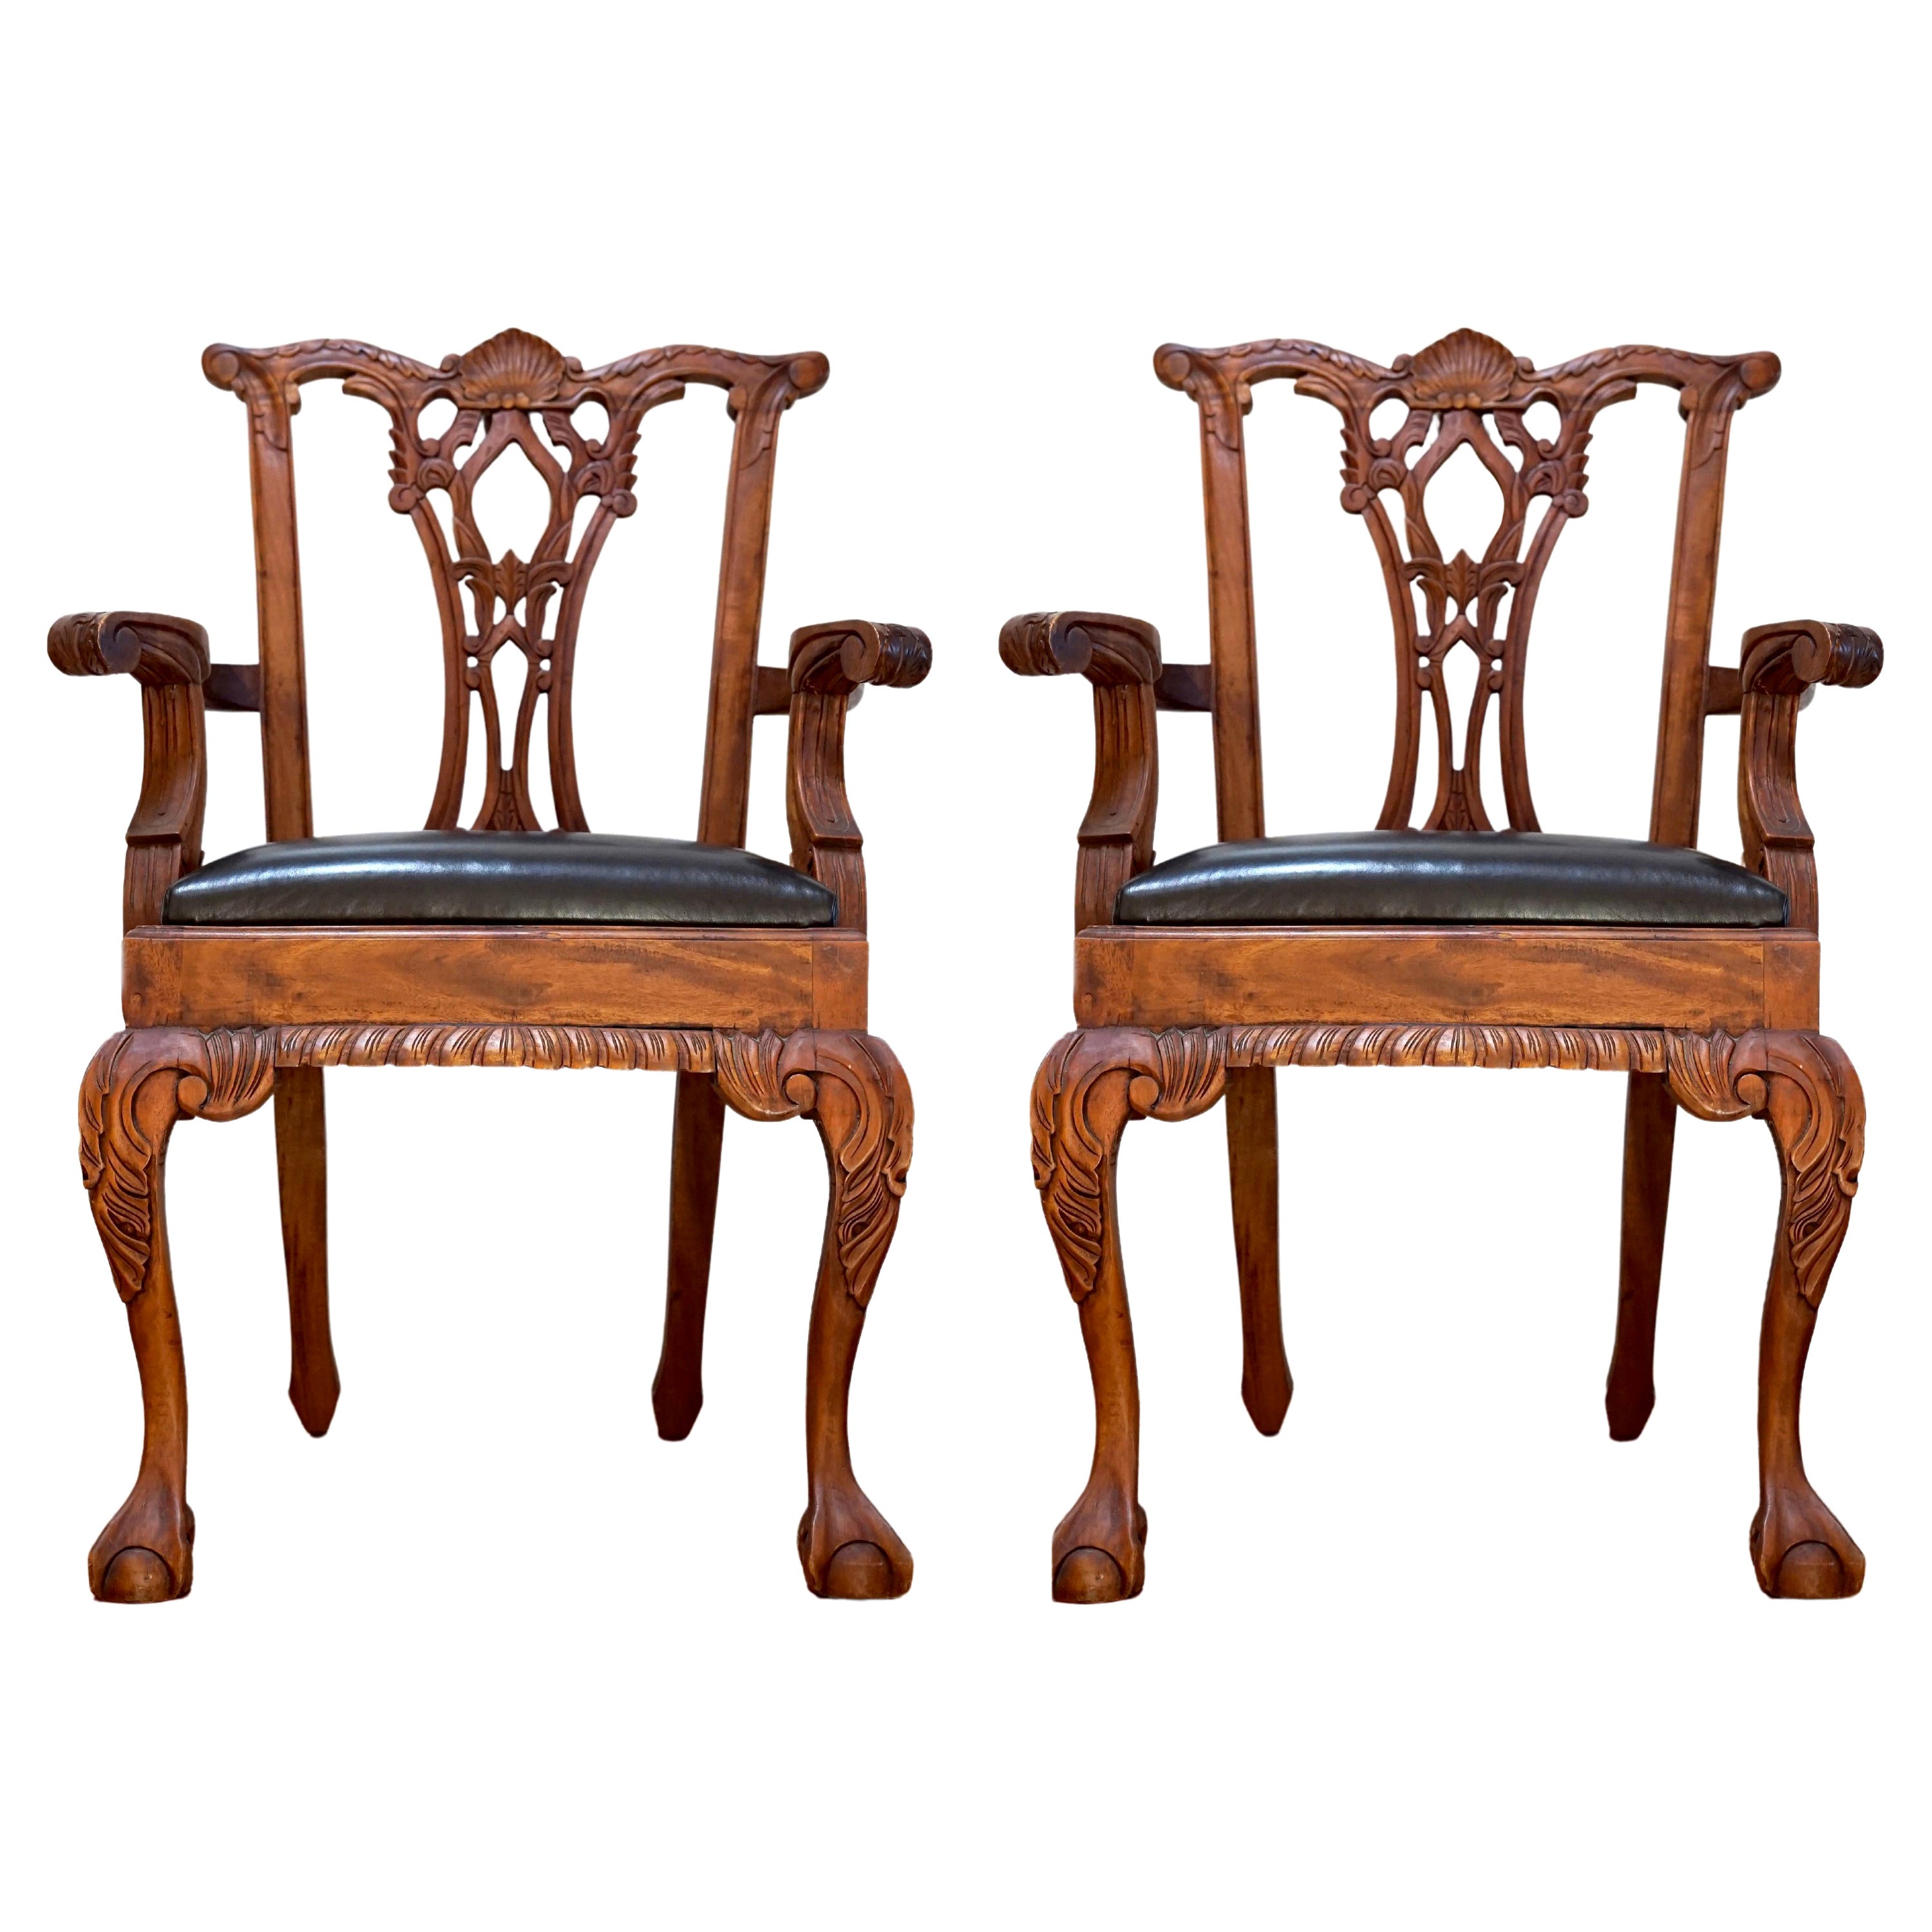 Leder und Mahagoni handgeschnitzt im Chippendale-Stil, Sessel im George-III-Stil